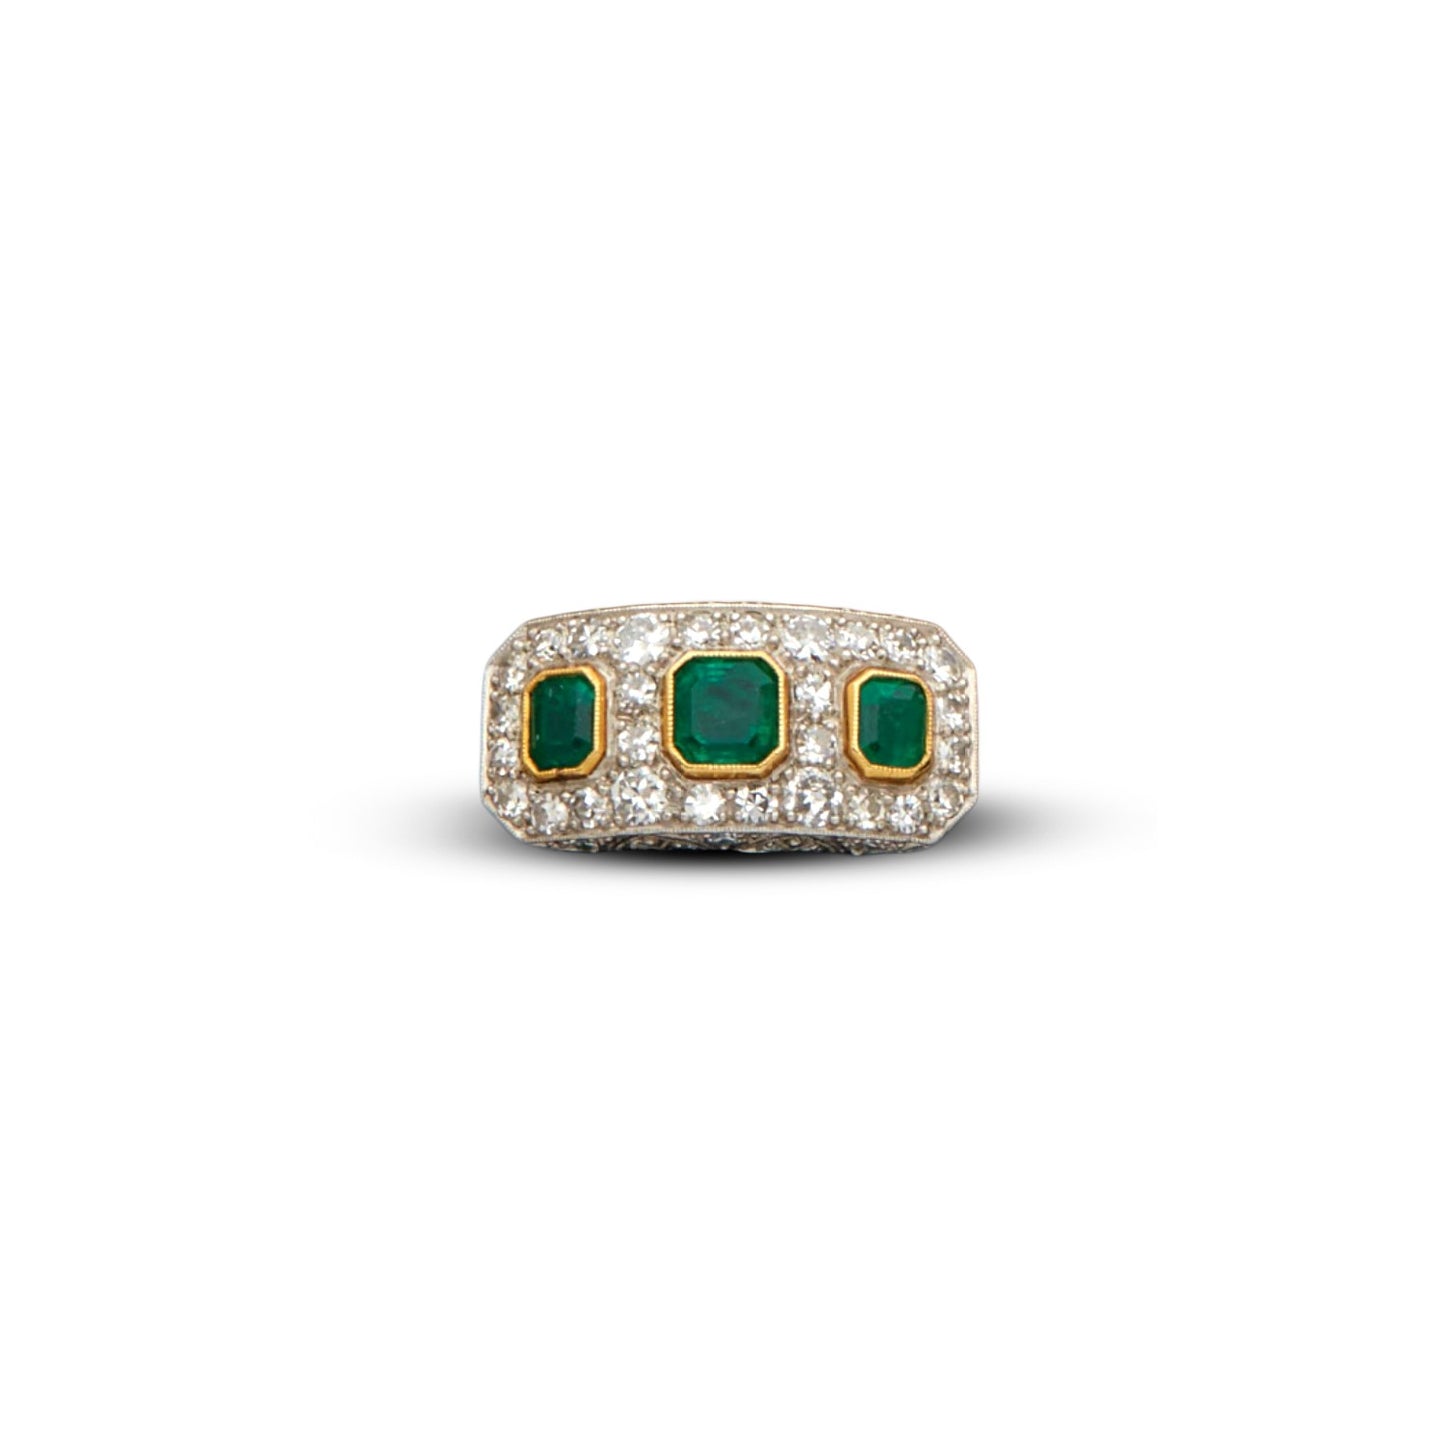 Vintage Platinum Emerald Ring